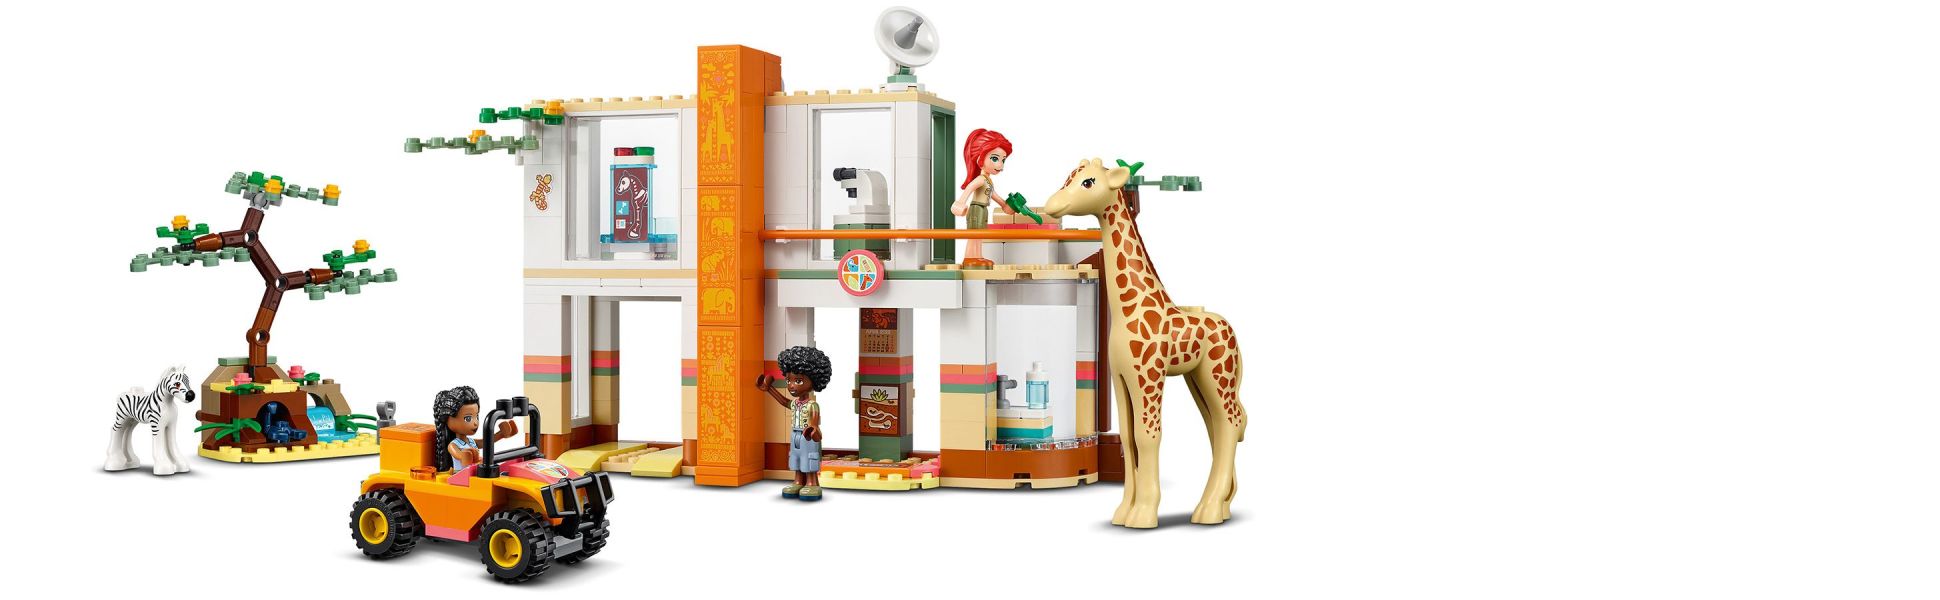 LEGO Friends Mia\'s Wildlife Gift Animal 41717 Mini for Dolls, with 7 Old Years Safari Age Figures Toy Idea Rescue 3 plus Plus Giraffe Zebra & Kids, Birthday and Girls Boys